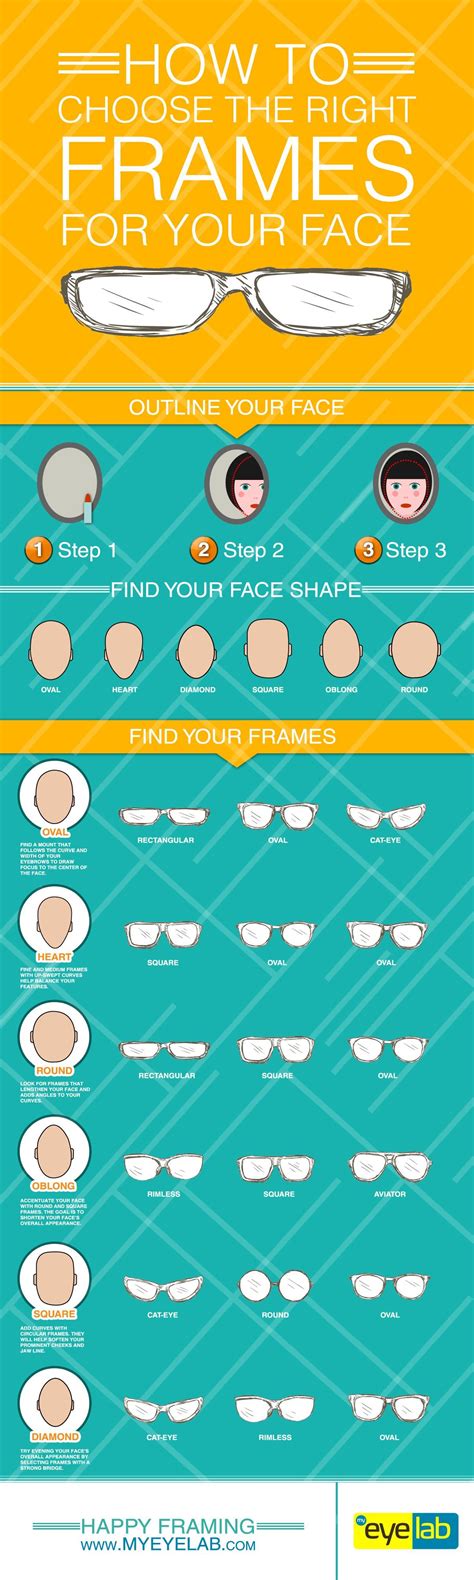 GET FRAMED! PICKING THE RIGHT GLASSES FOR YOUR FACE SHAPE - MyEyeLab Glasses Frames Trendy ...